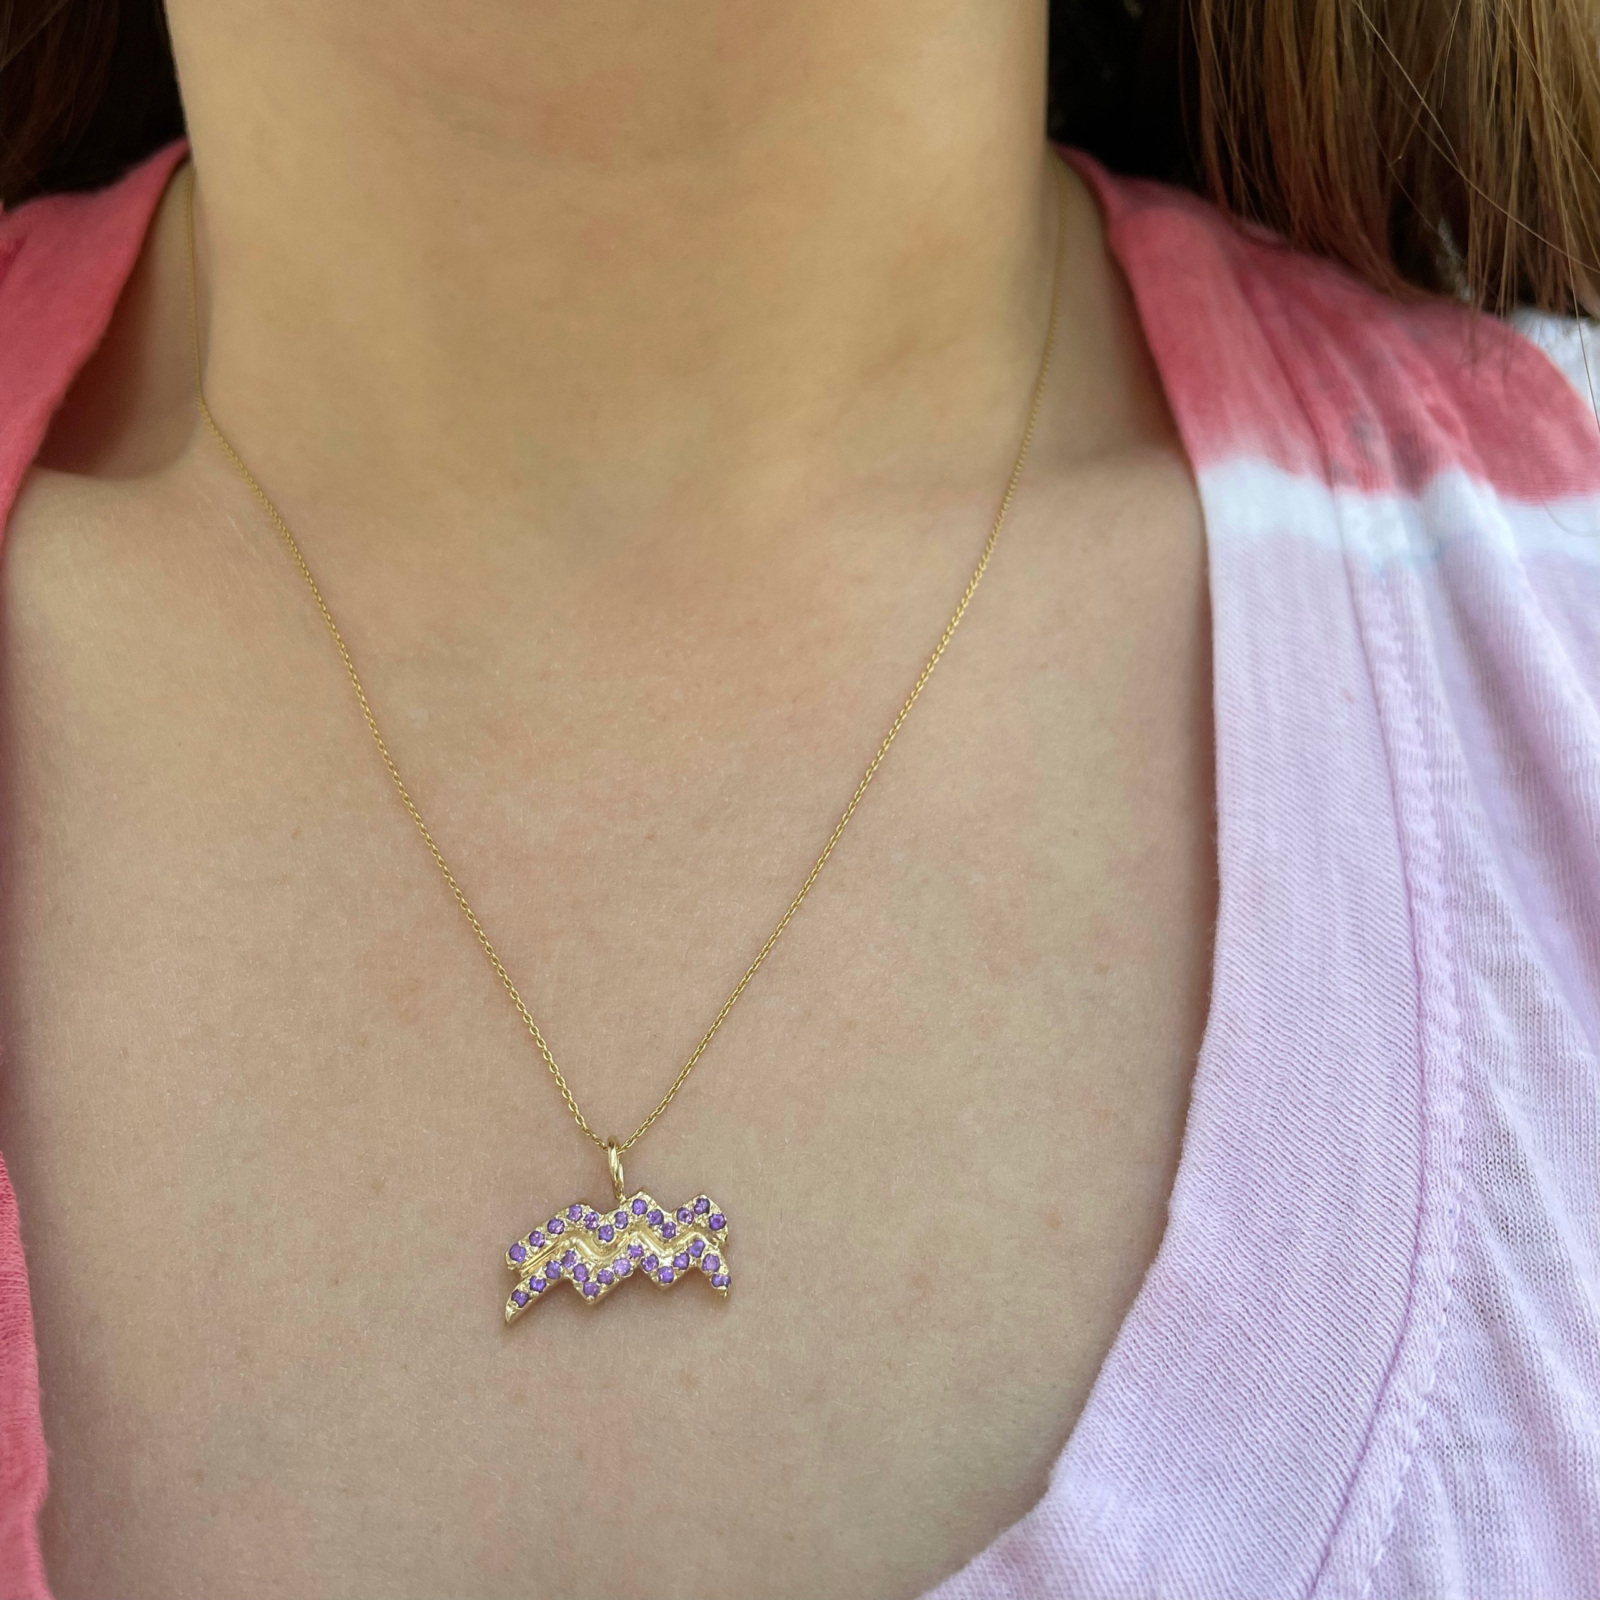 Aquarius zodiac sign charm pendant necklace